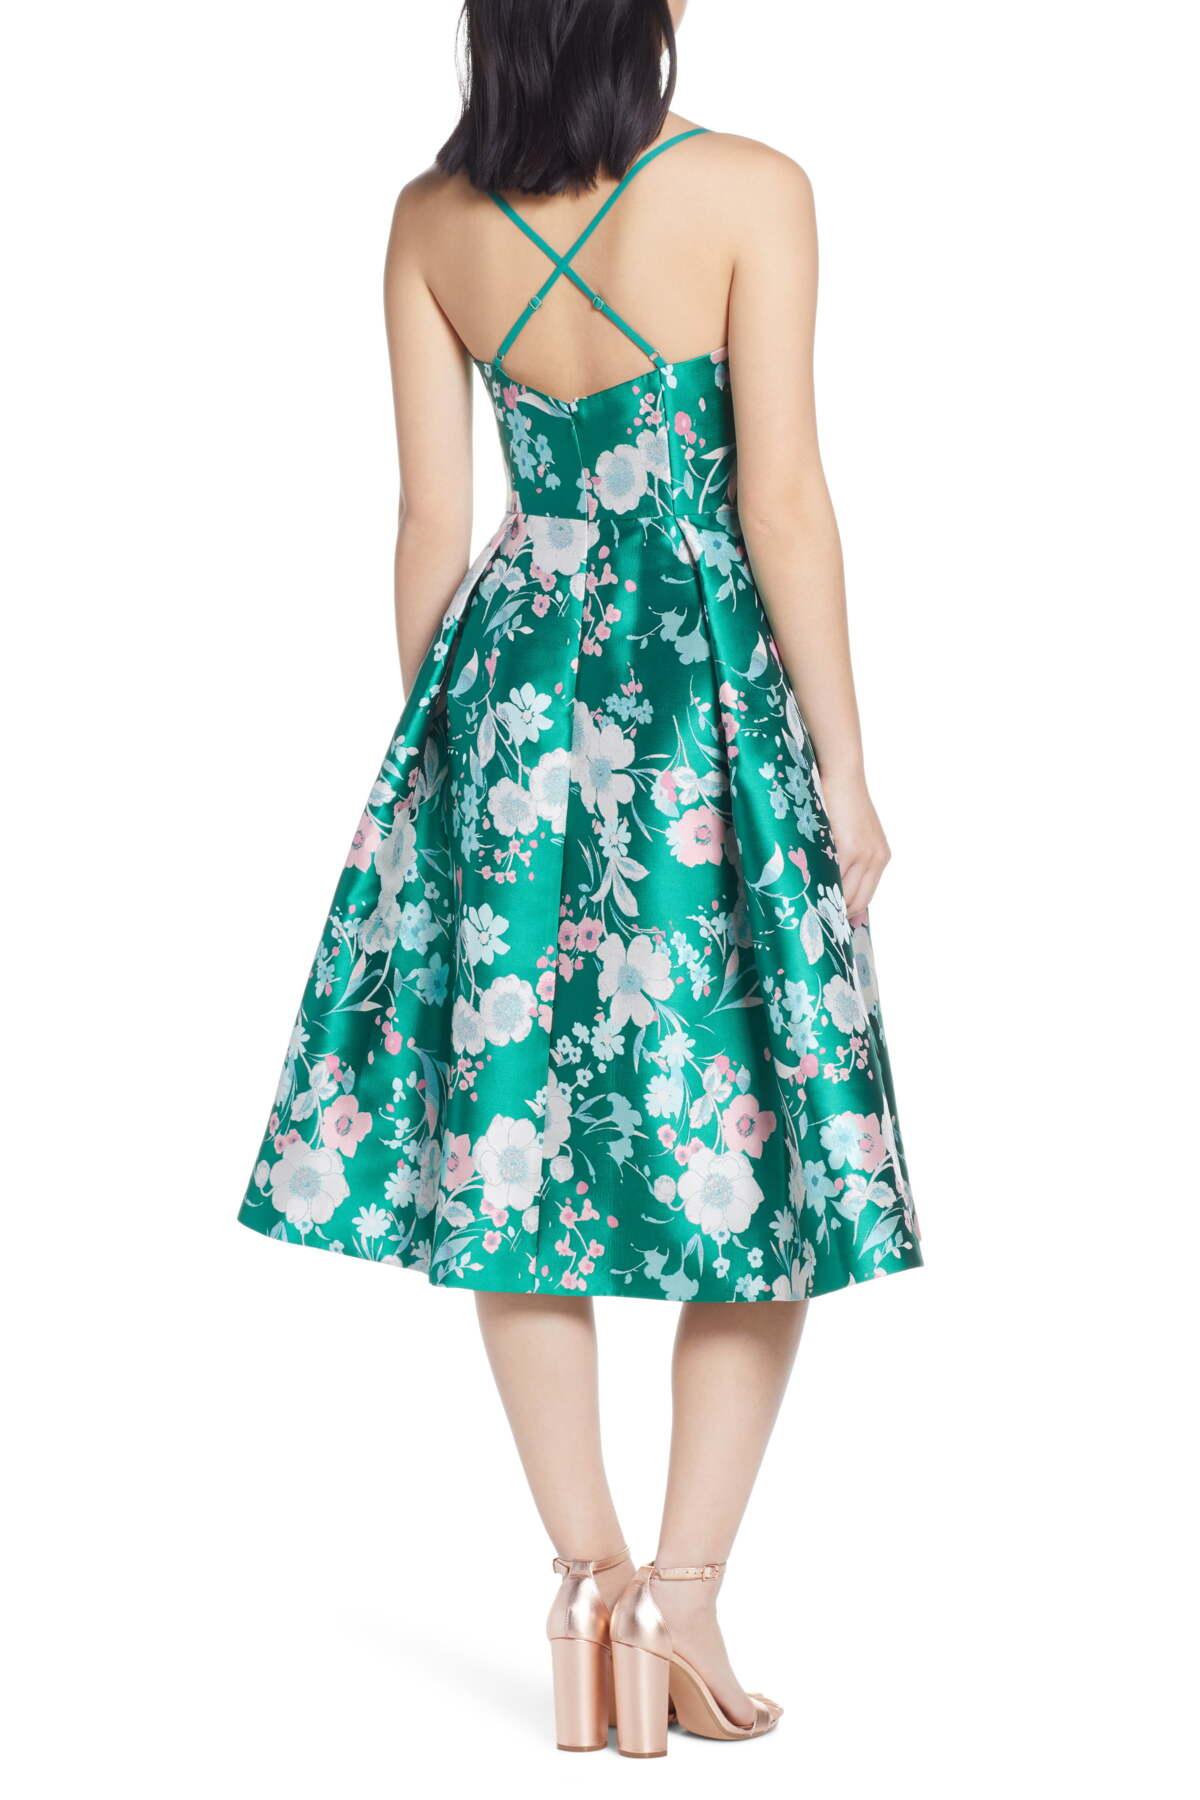 Eliza J Floral Jacquard Fit & Flare Dress in Green - Lyst